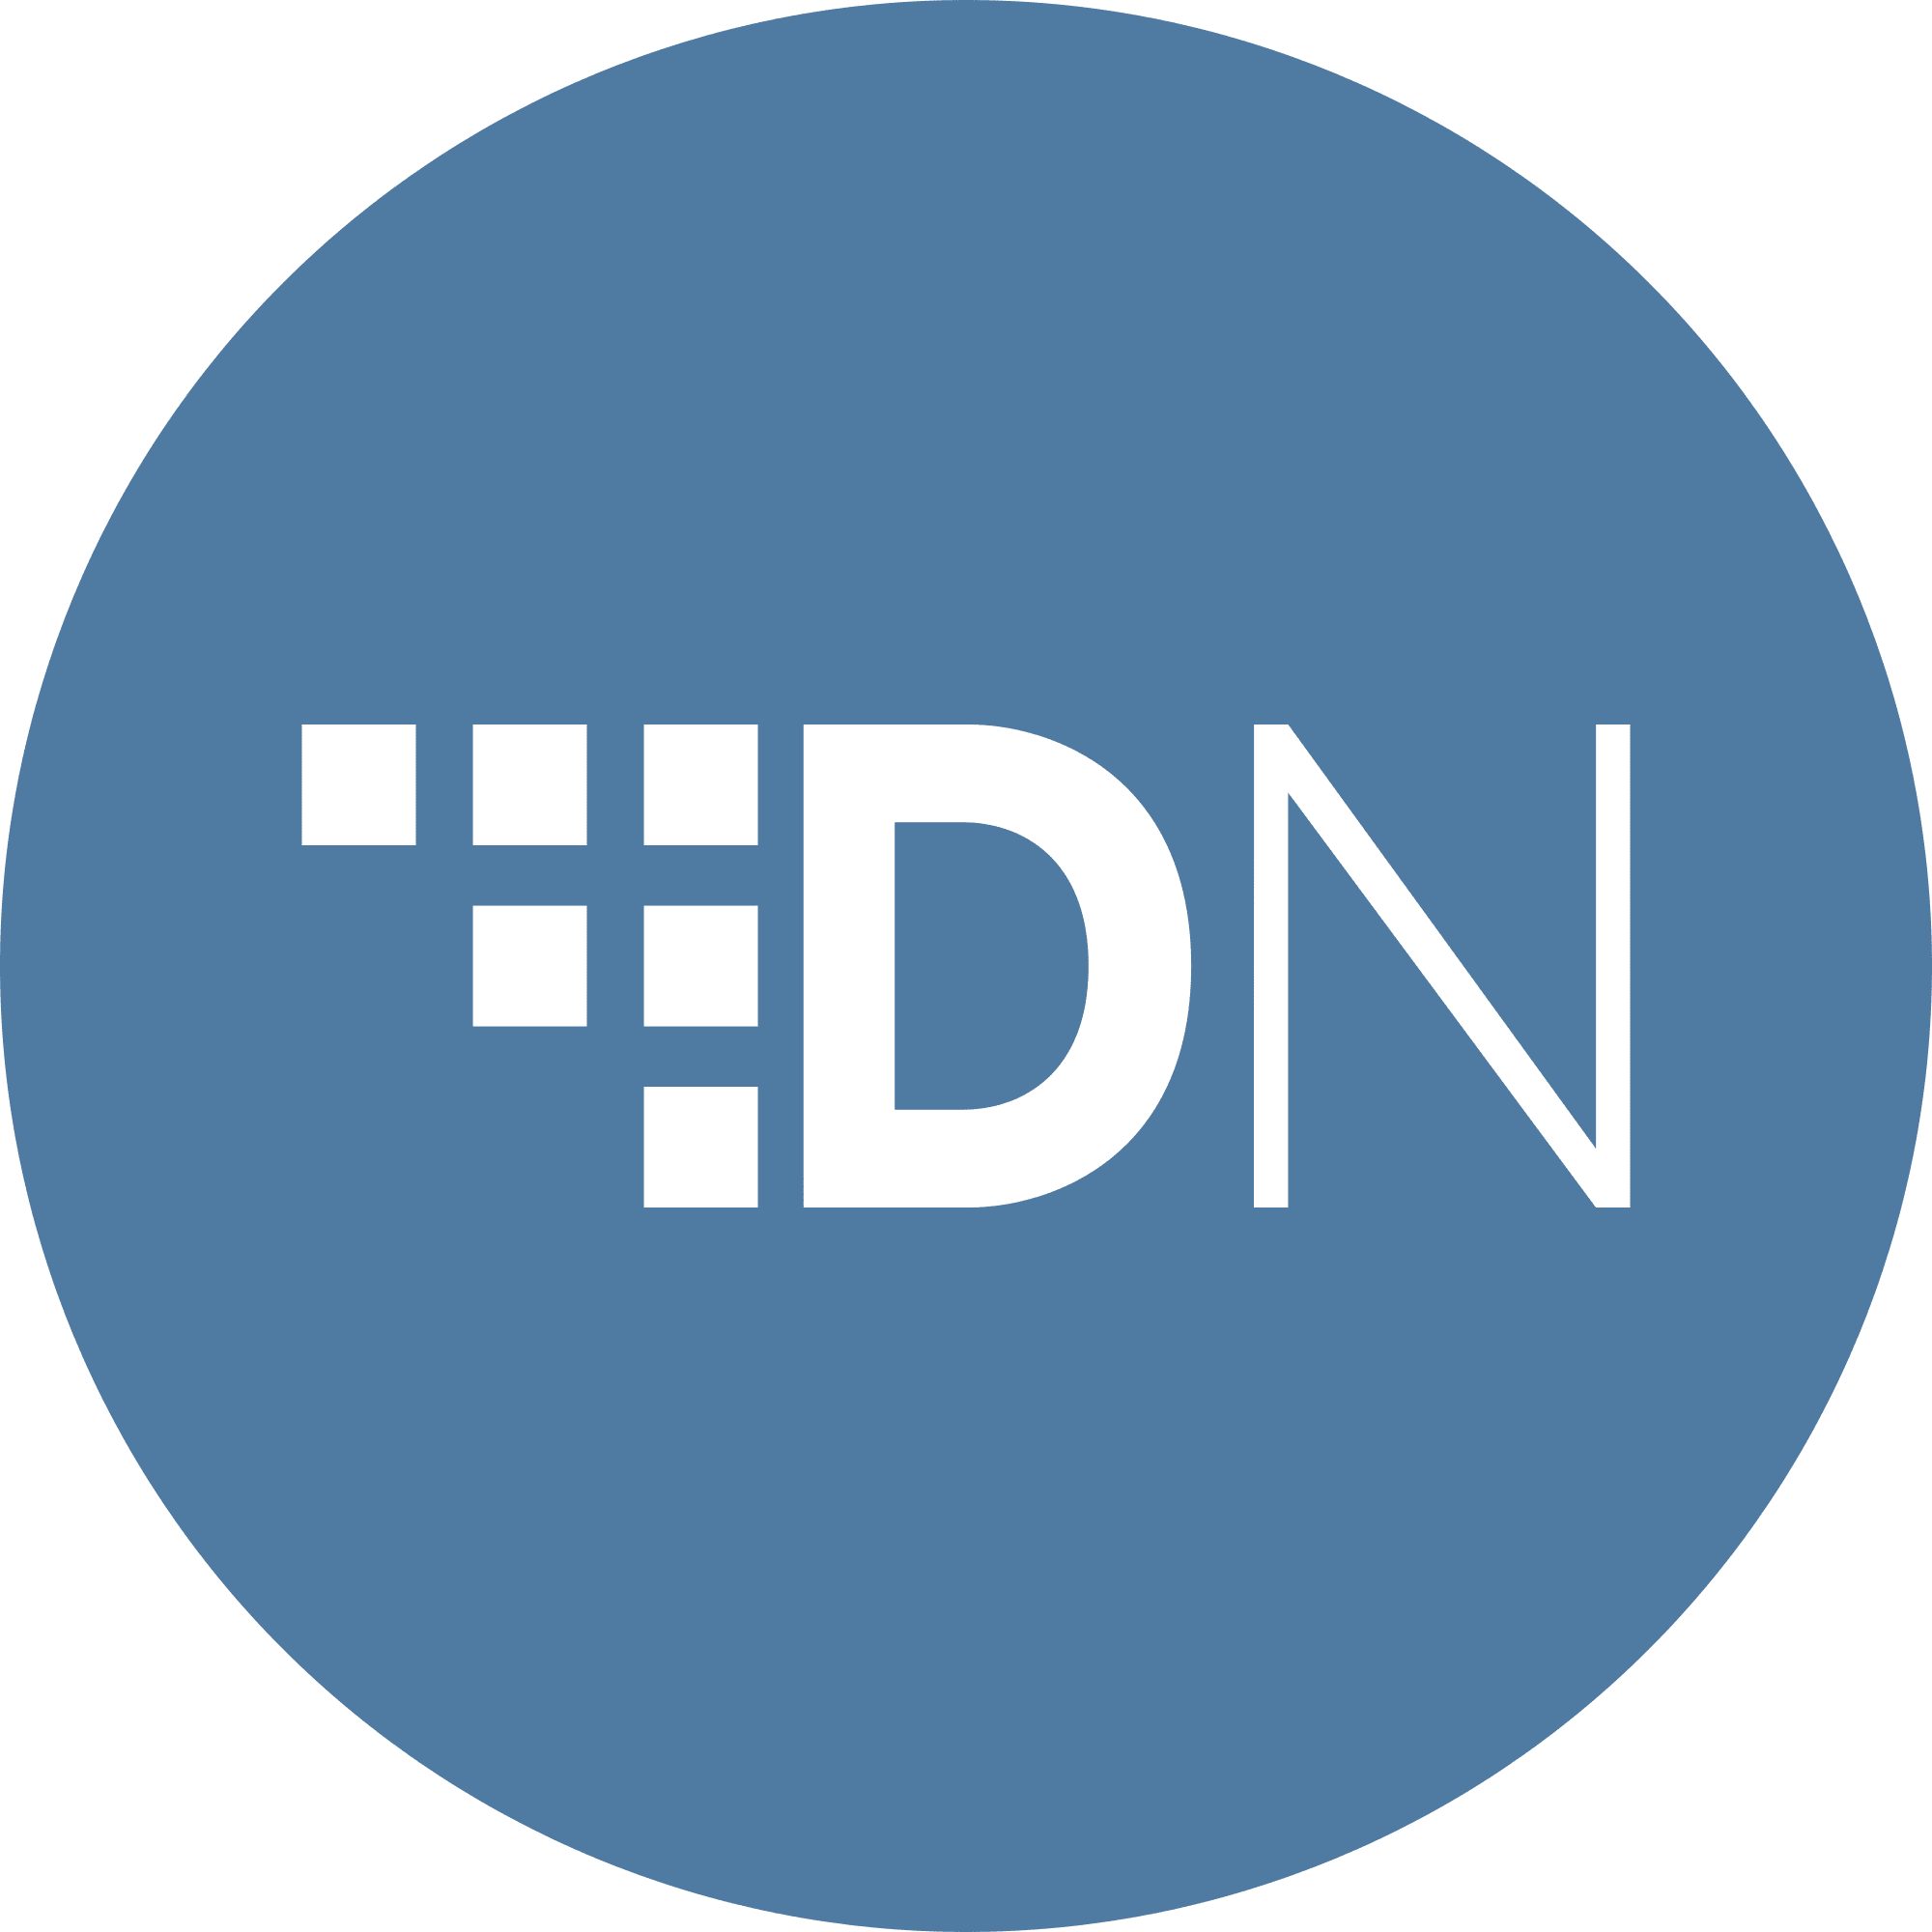 DigitalNote logo in png format